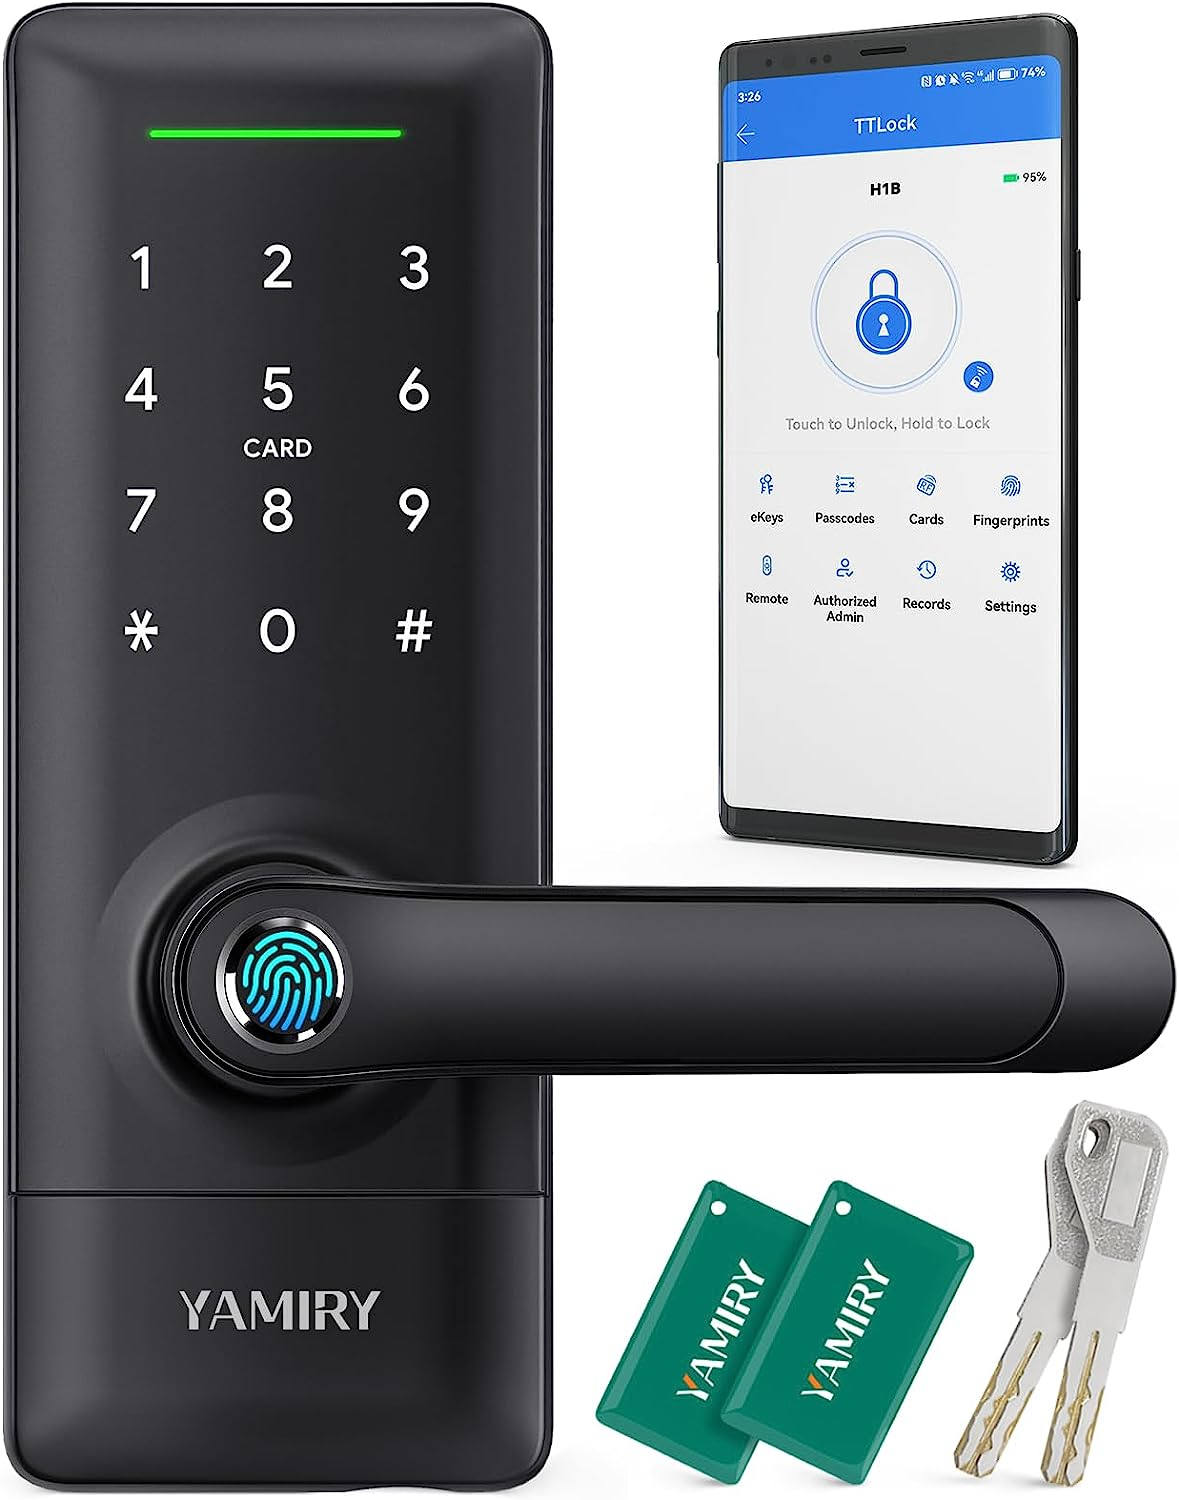 screenshot of Yamiry lock interface